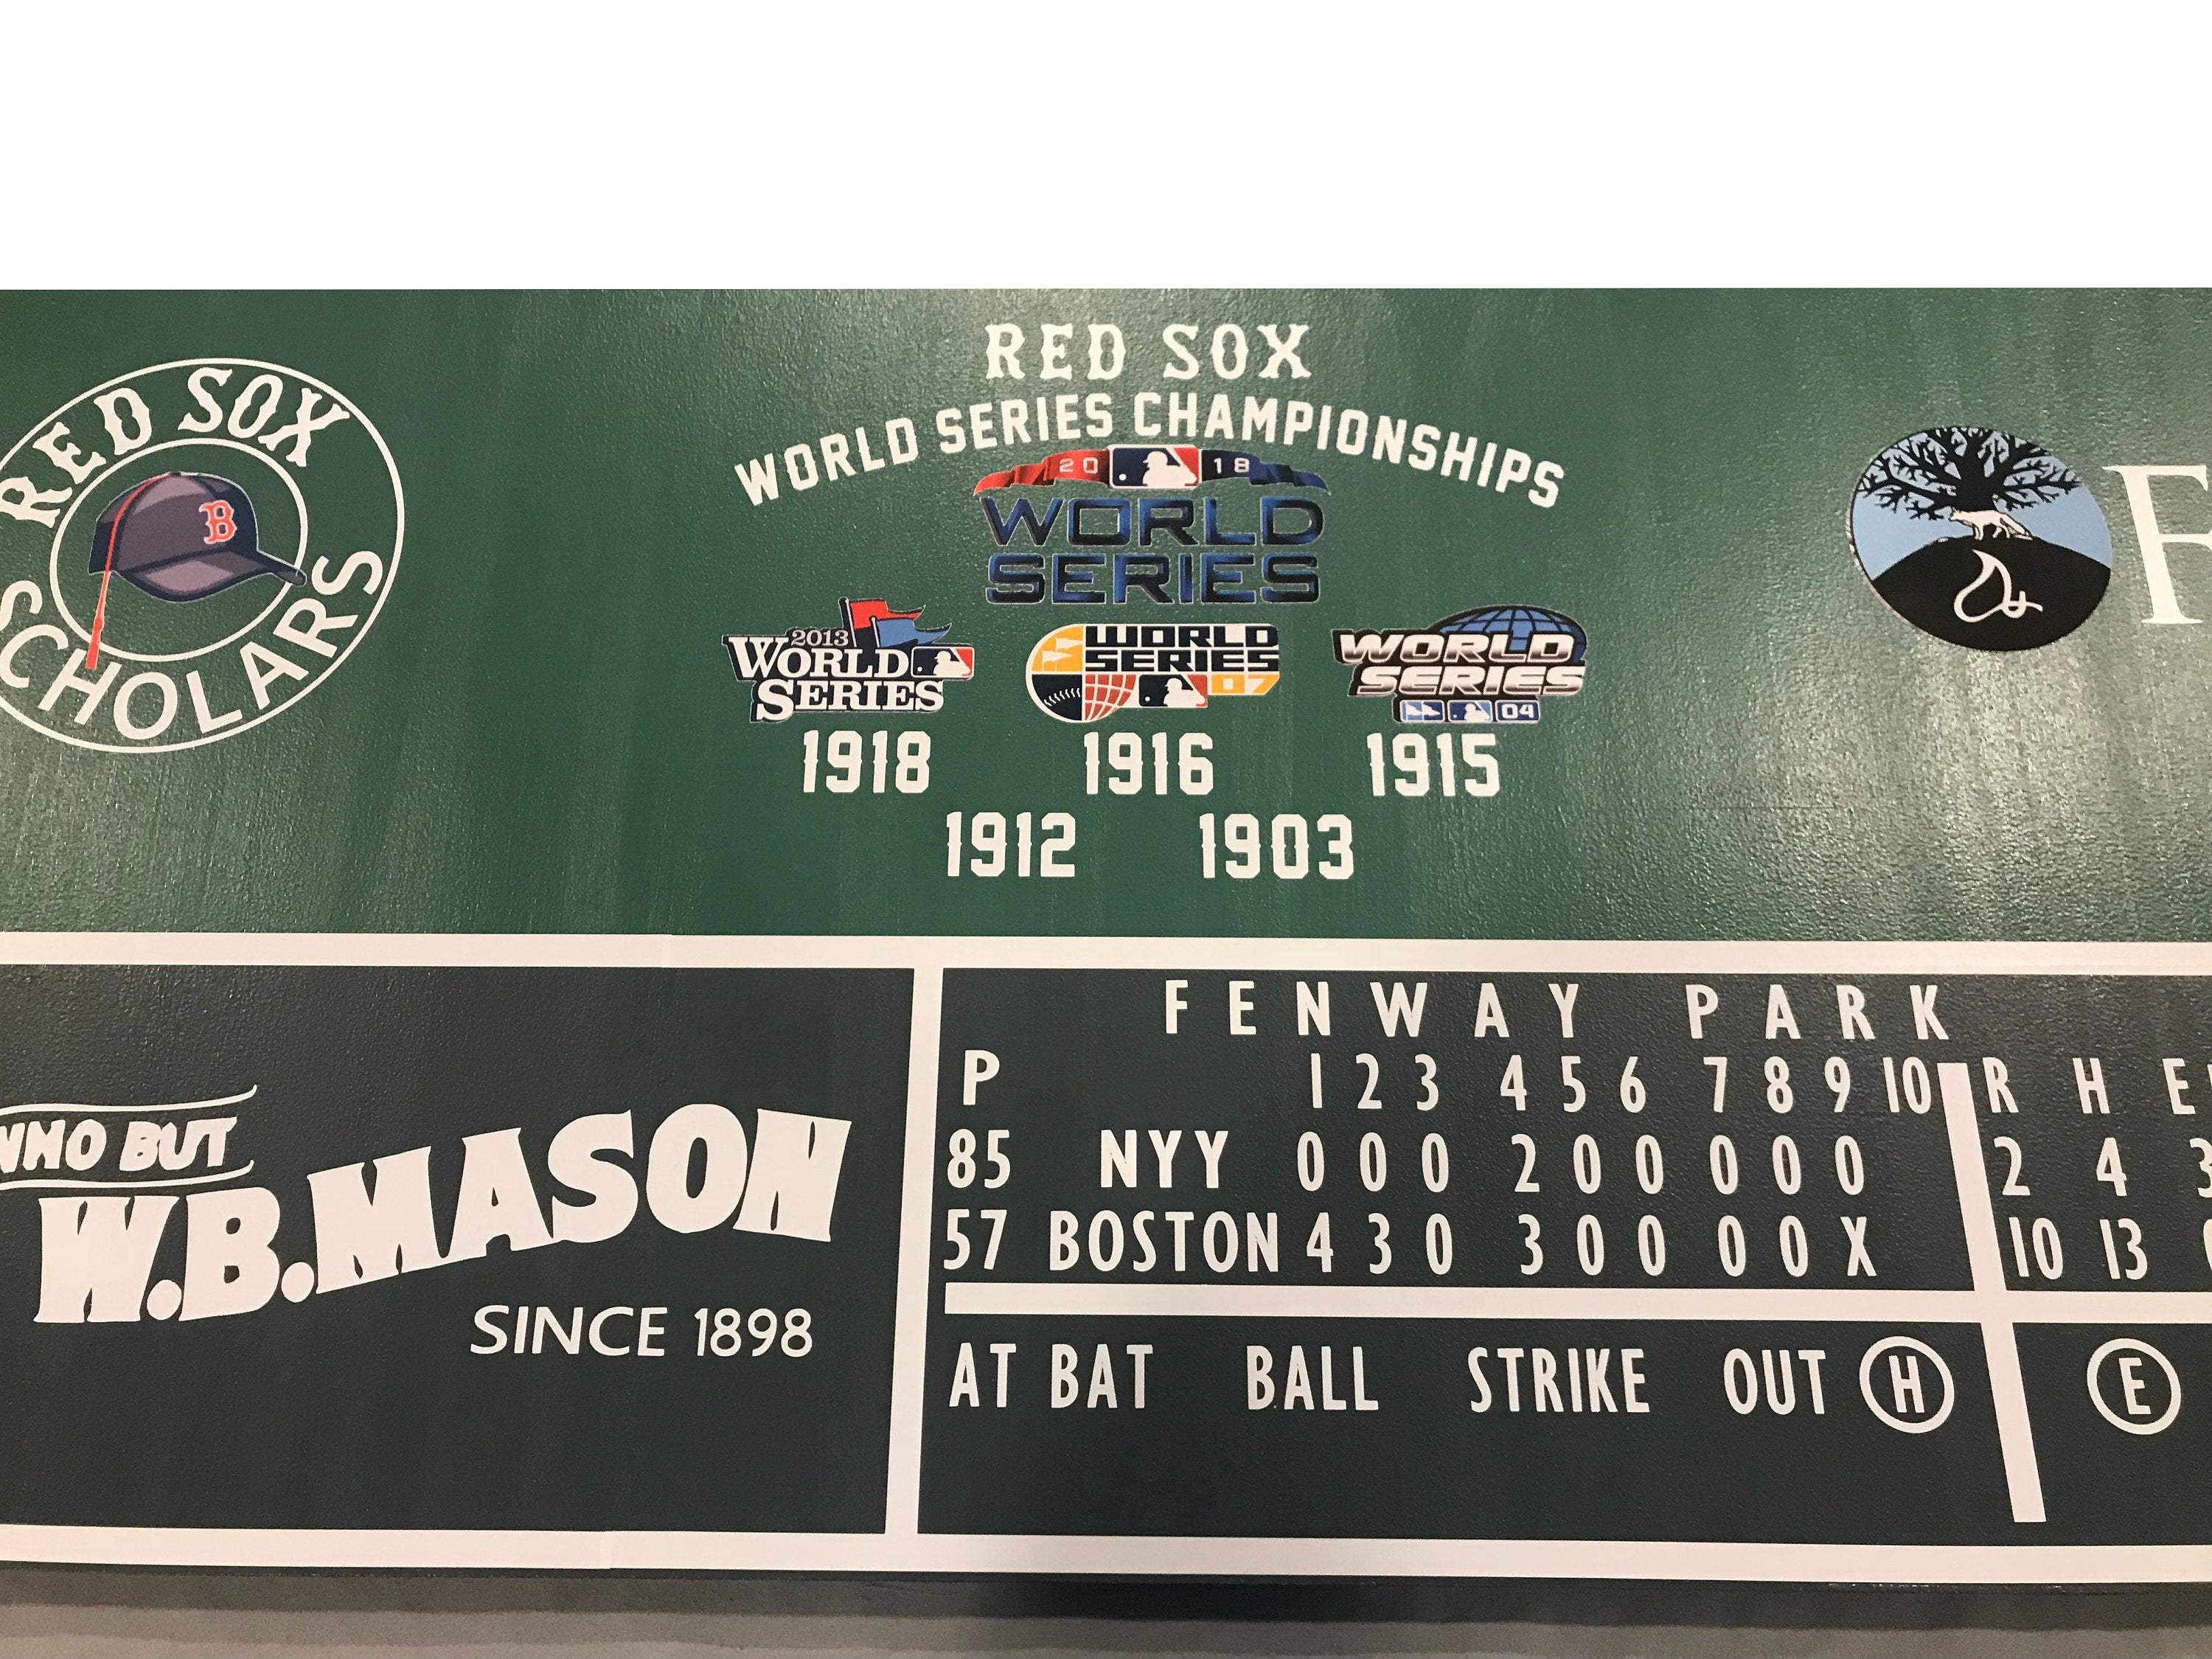 Boston Red Sox Fenway Park Green Monster Outfield Wall Scoreboard 2018 World Series 72" (6 Feet) Wide!